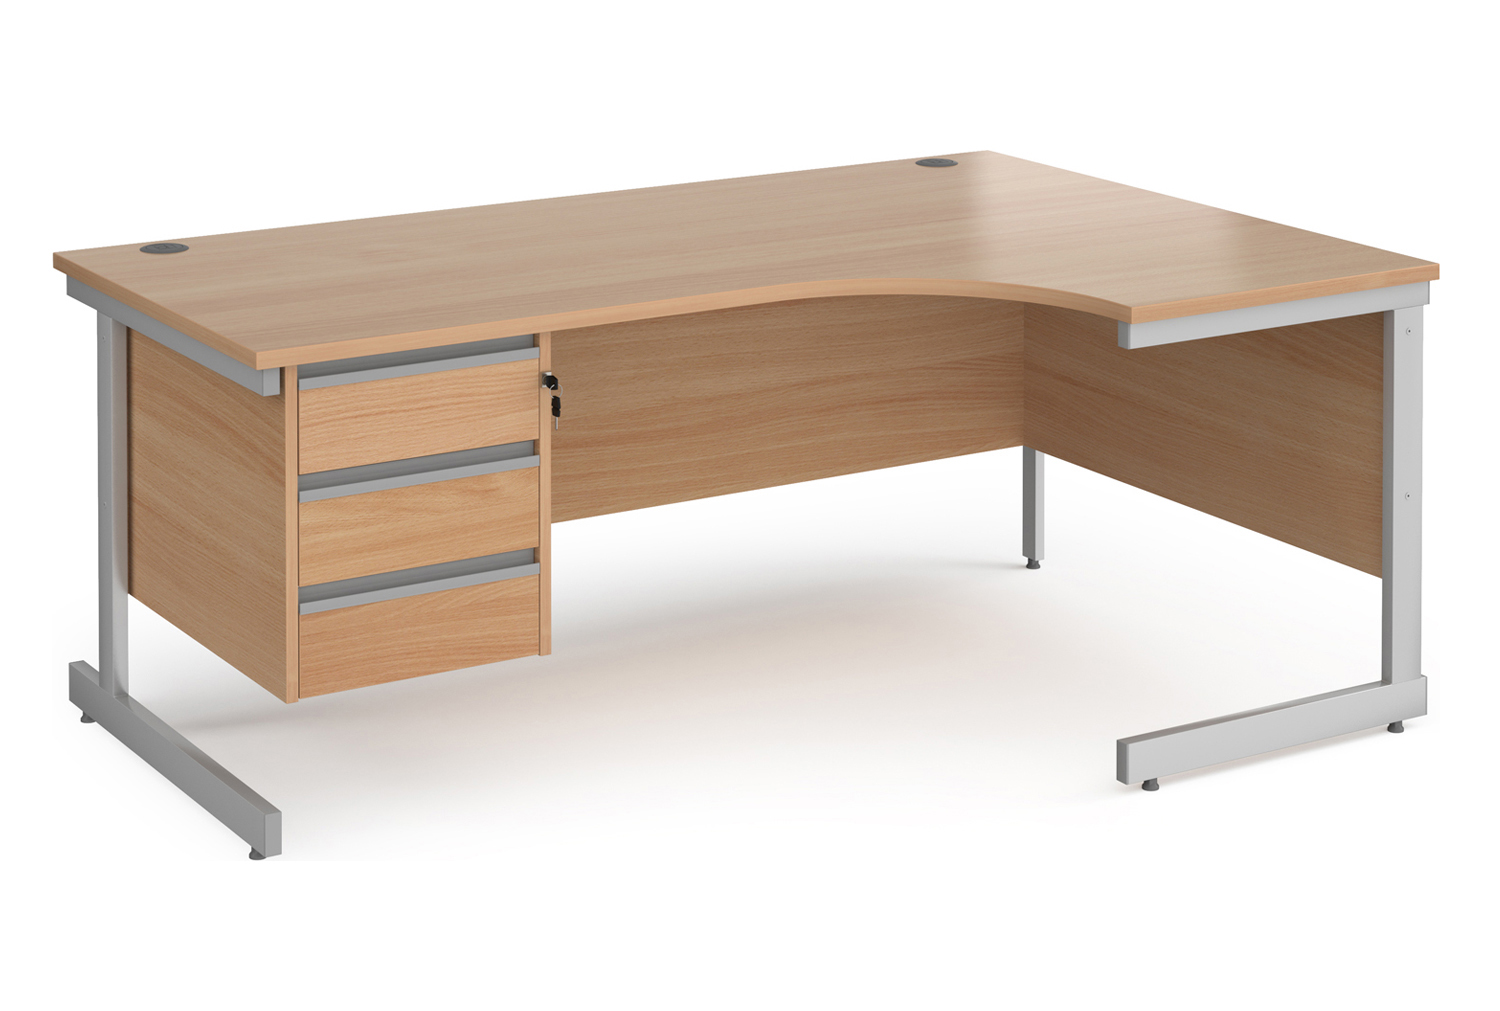 Value Line Classic+ C-Leg Right Ergo Office Desk 3 Drawers (Silver Leg), 180wx120/80dx73h (cm), Beech